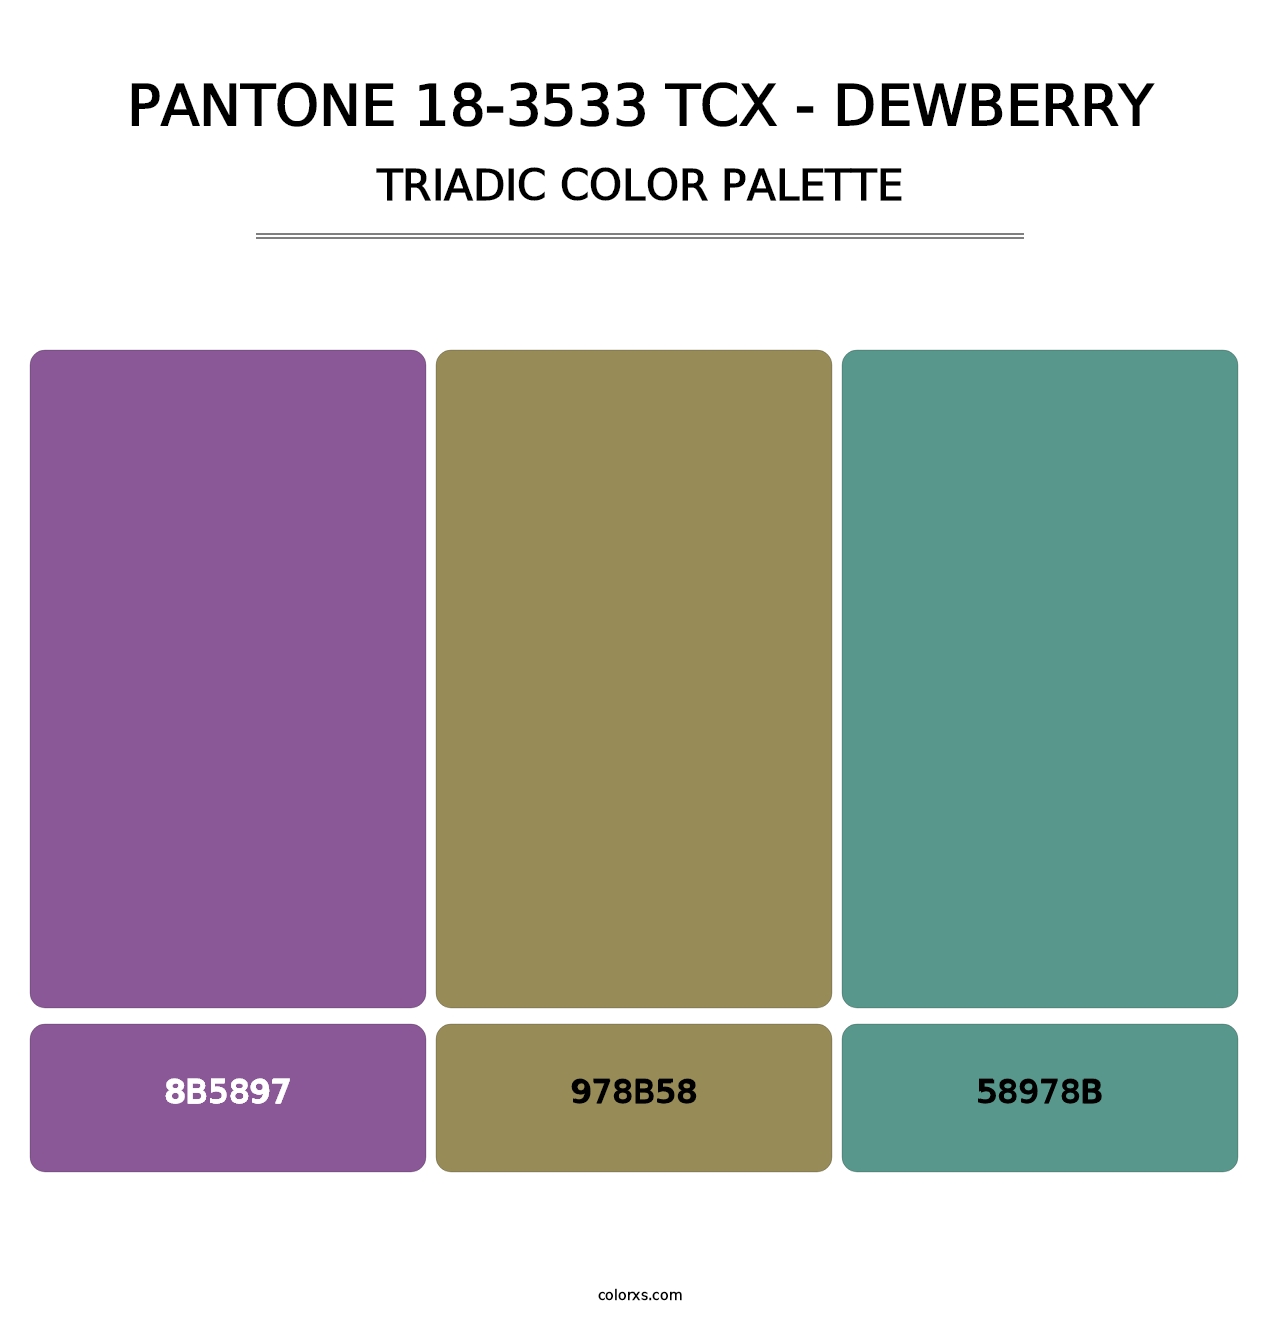 PANTONE 18-3533 TCX - Dewberry - Triadic Color Palette